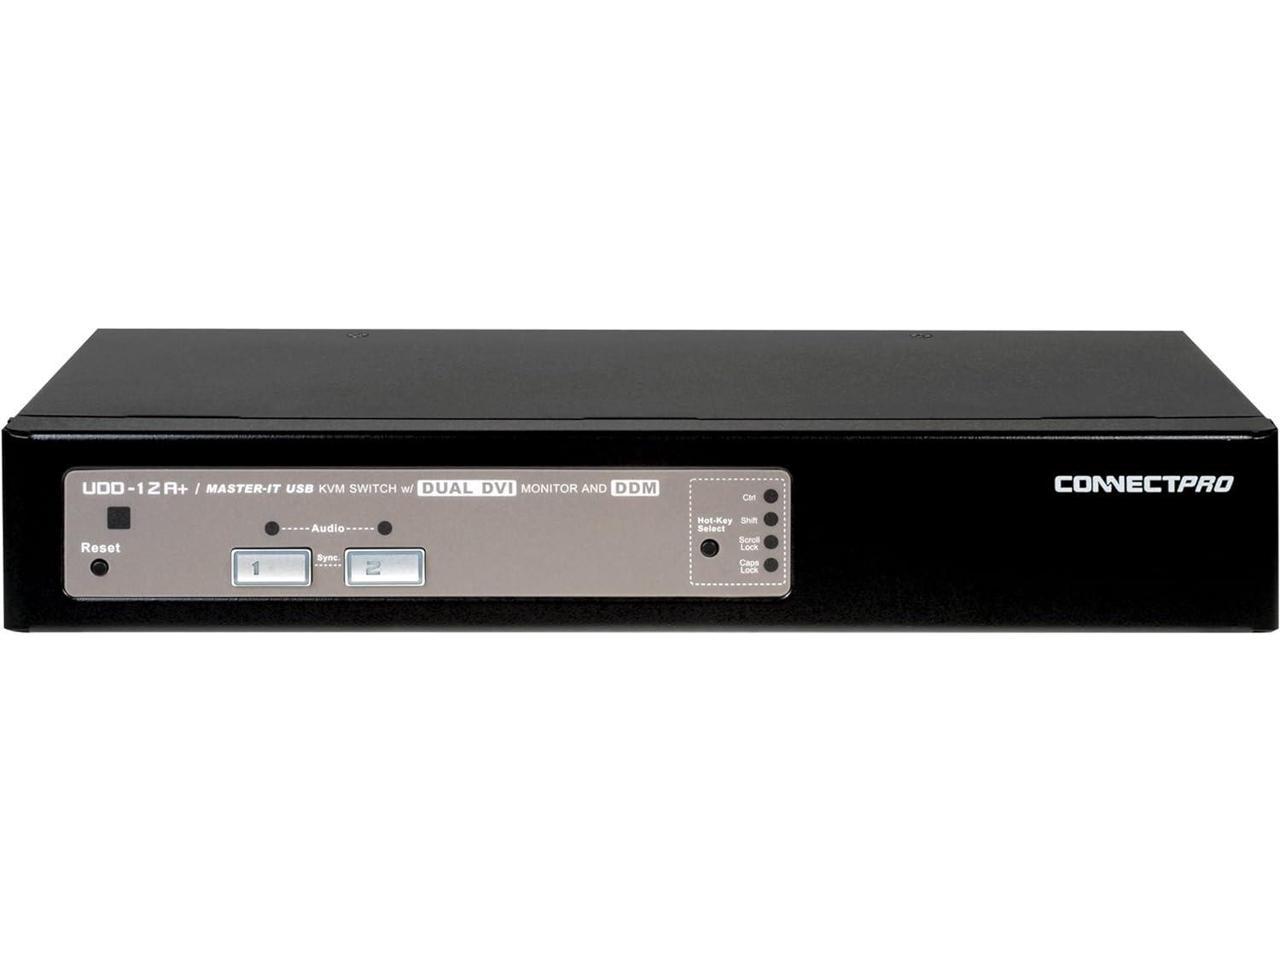 ConnectPRO Master-IT UDD-12A + KIT - KVM/Audio Switch - 2 Ports 